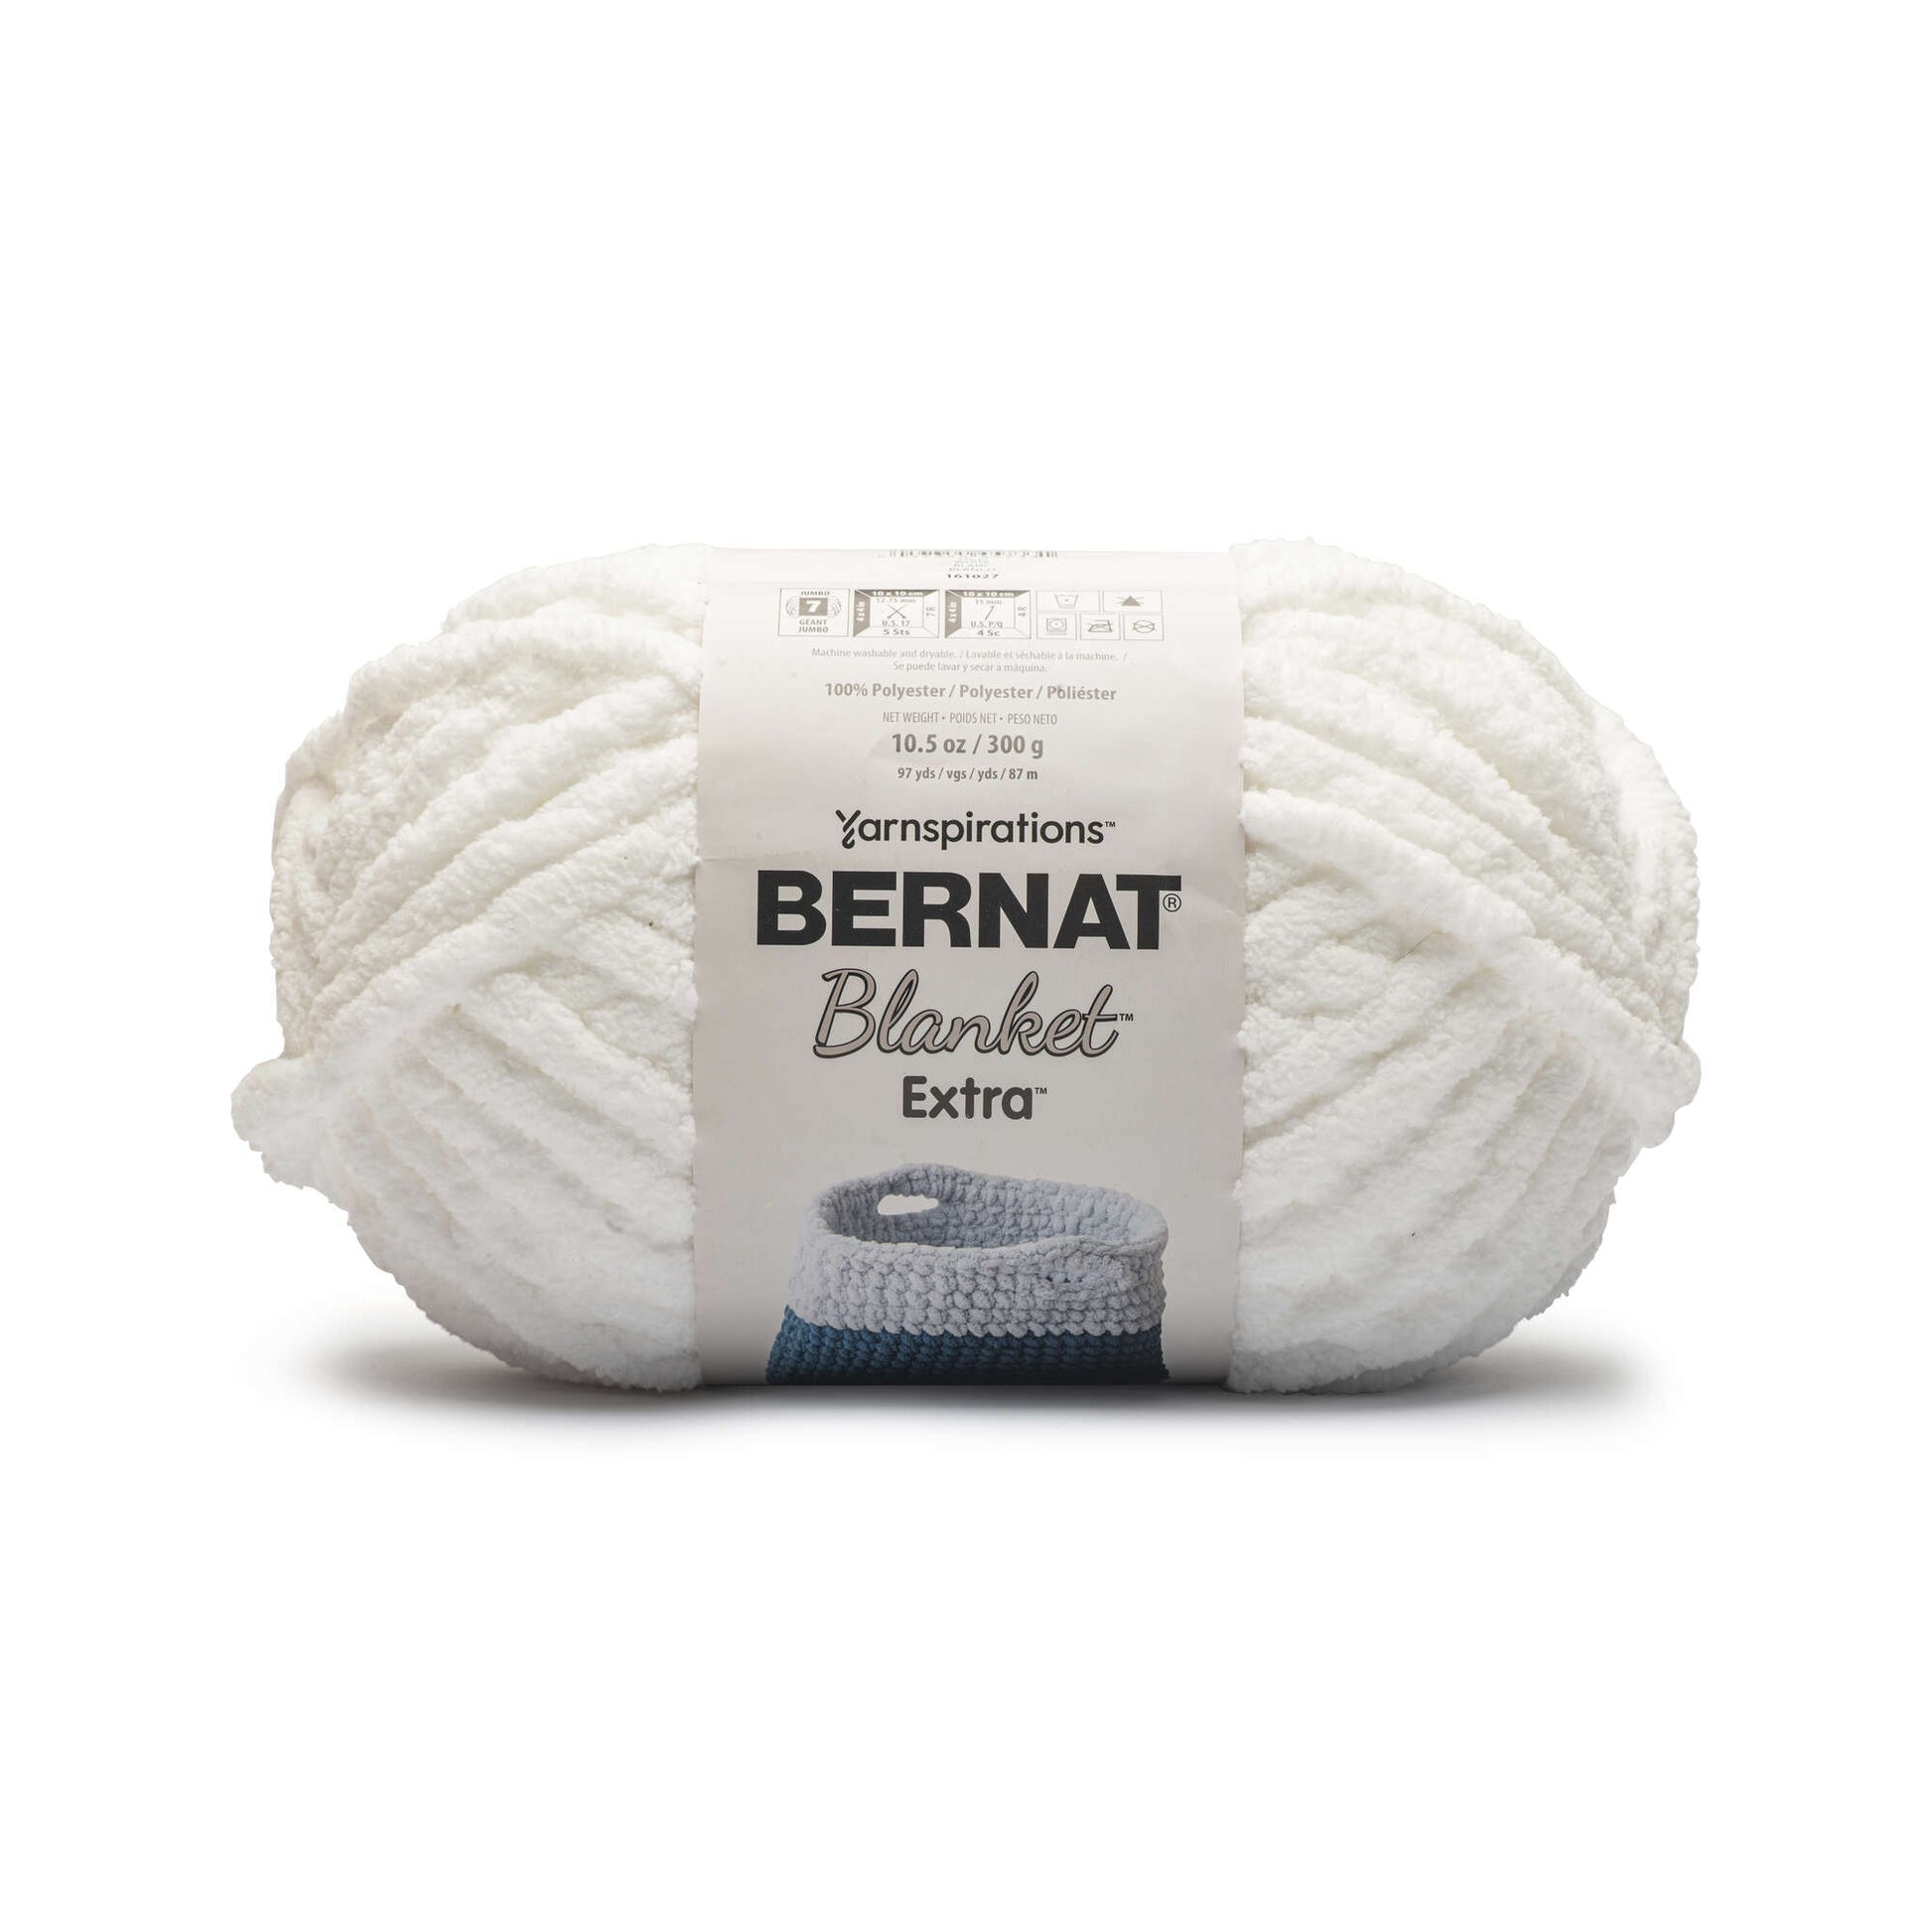  Bernat Blanket Extra Blanket Yarn, Jumbo Gauge 7, Burgundy Plum  2-Pack